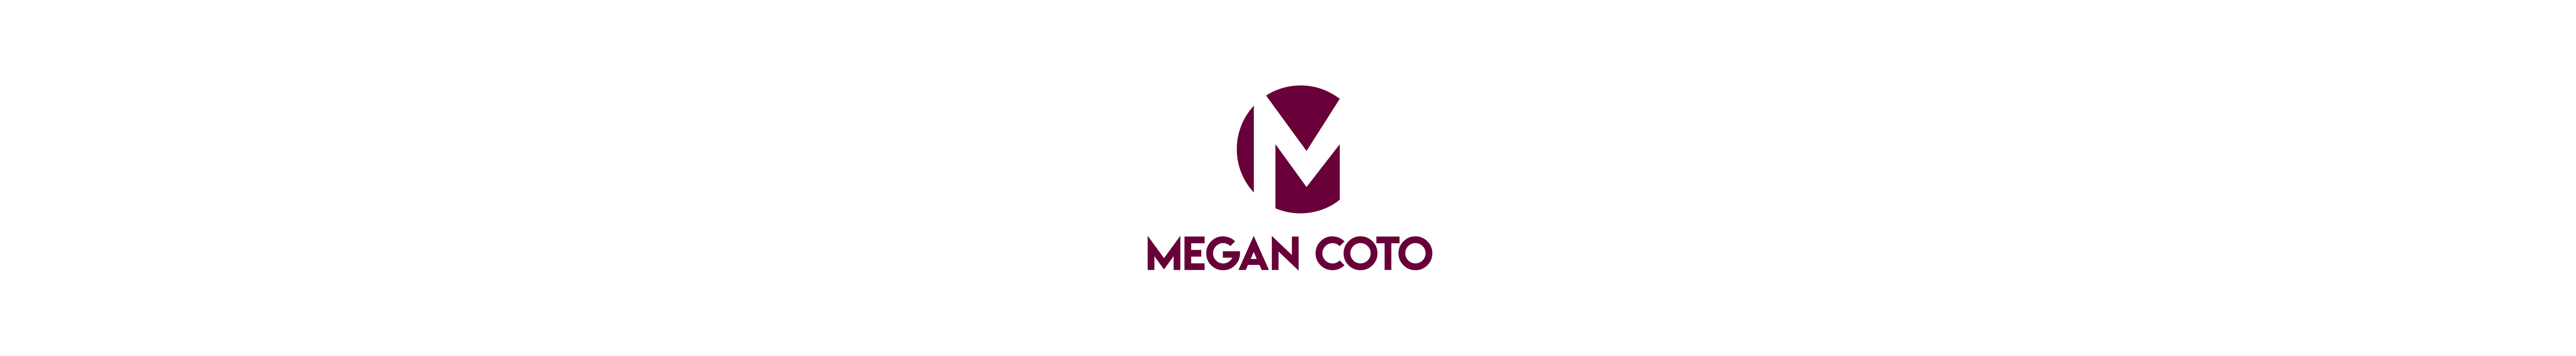 Megan Coto profil başlığı